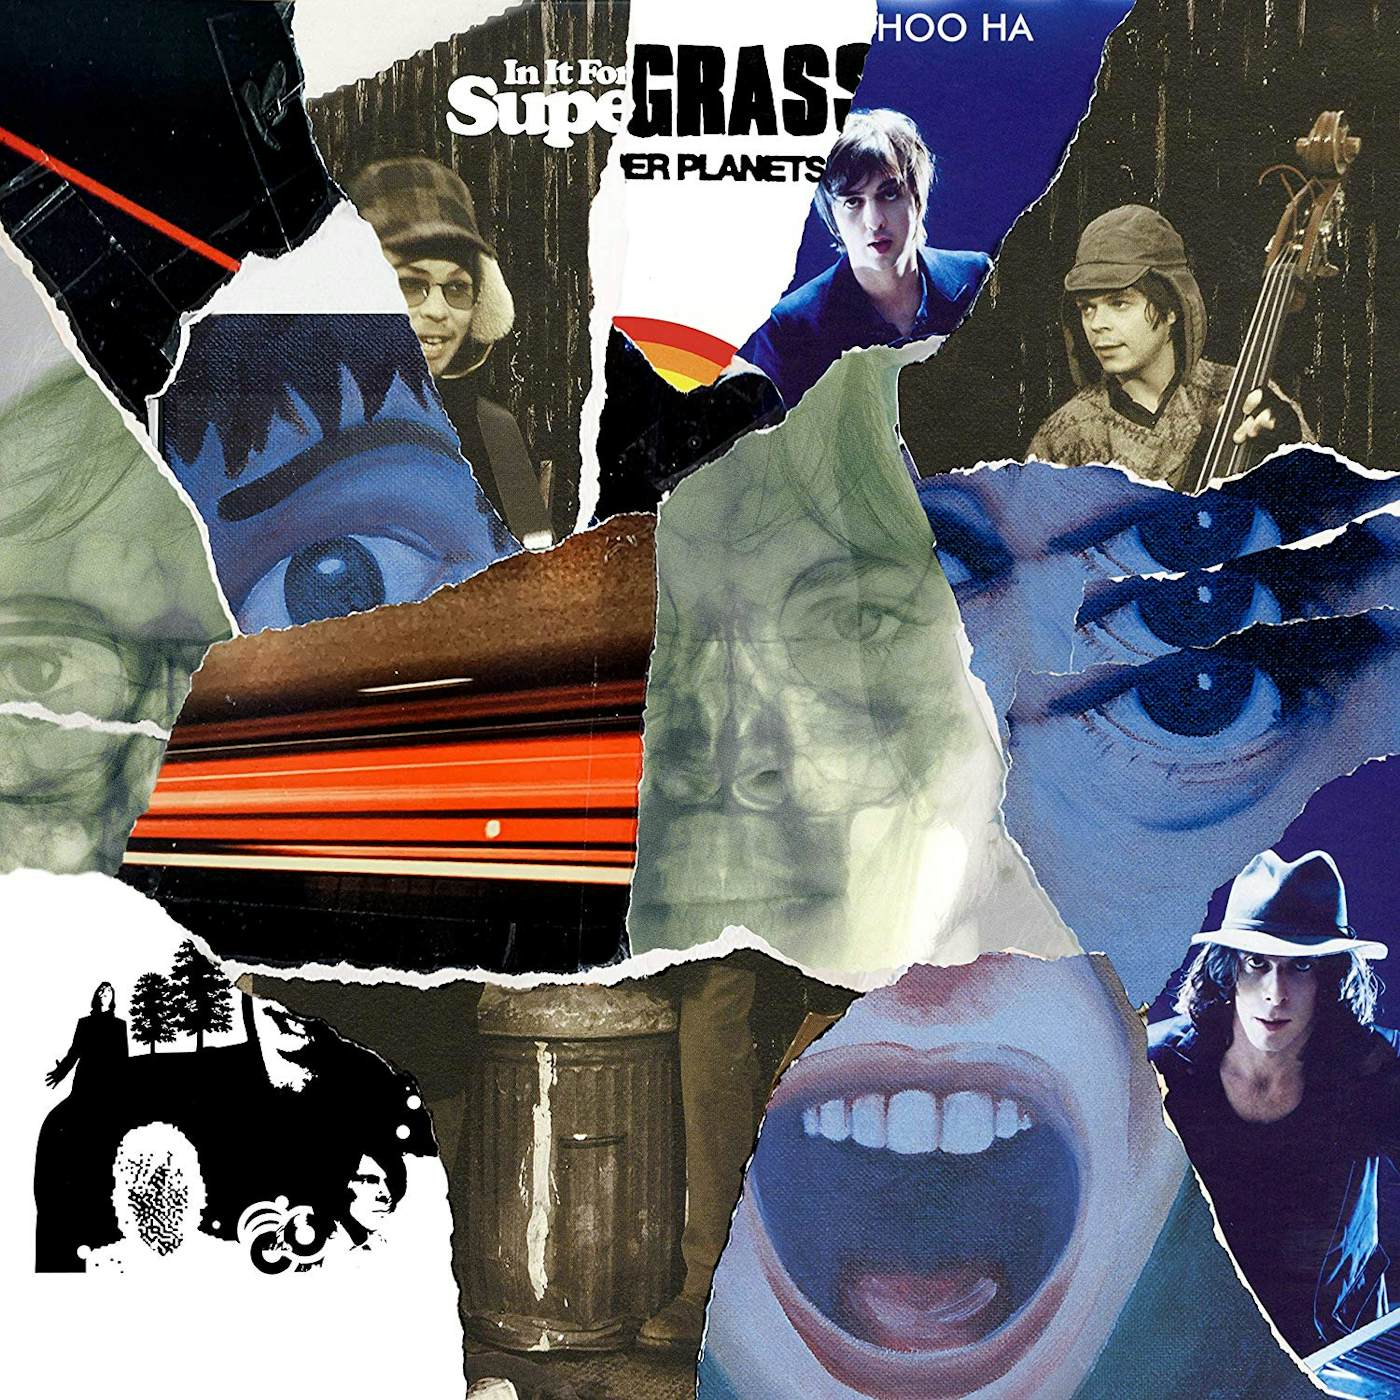 Supergrass - The Strange One 1994-2008